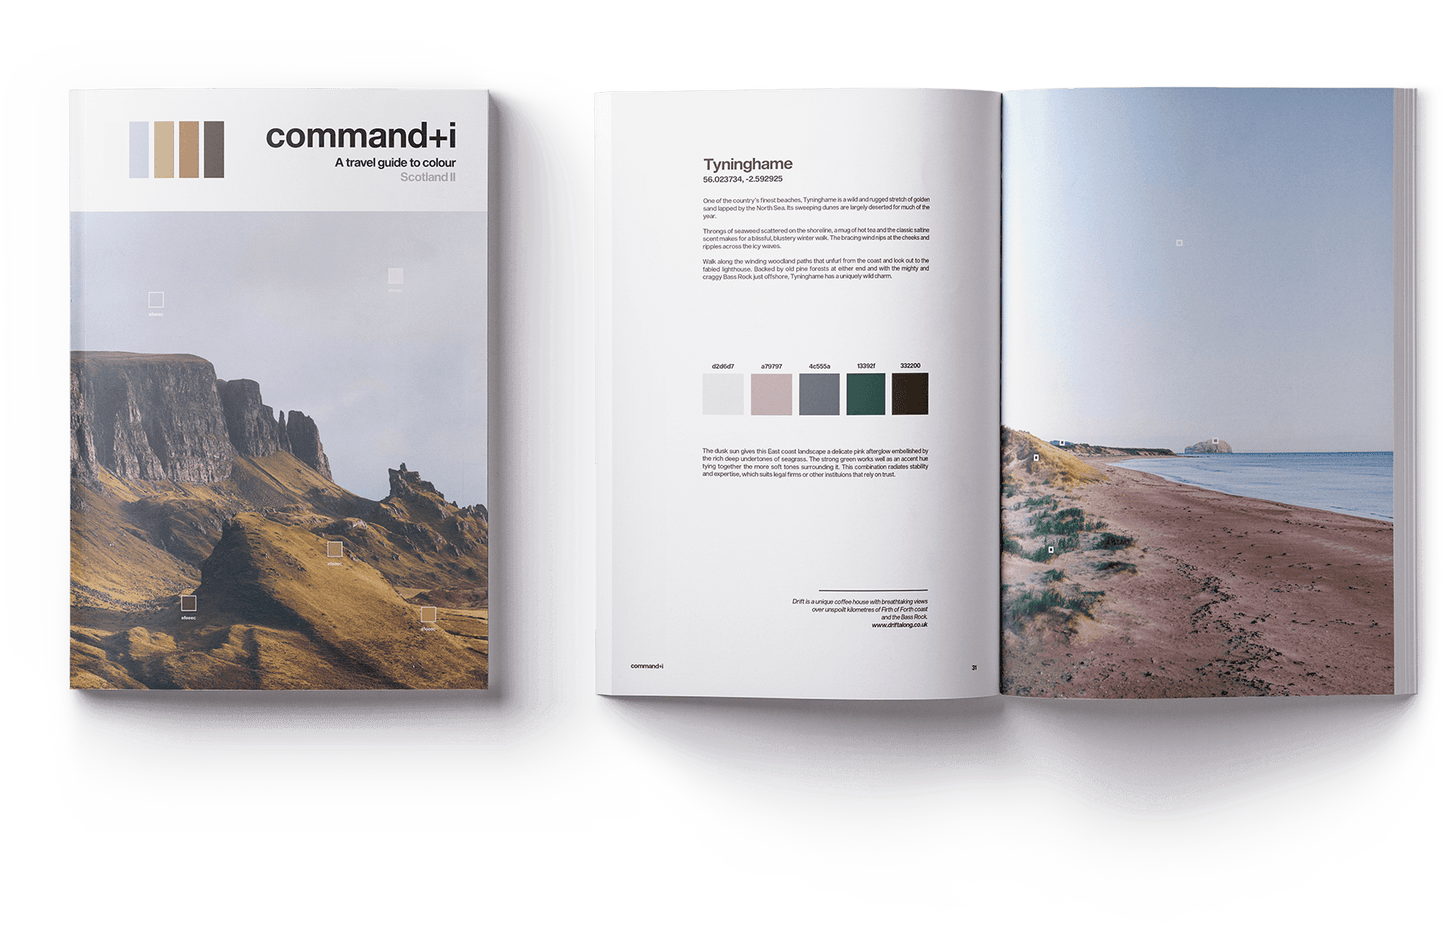 Command+i A Travel Guide to Colour - Scotland II